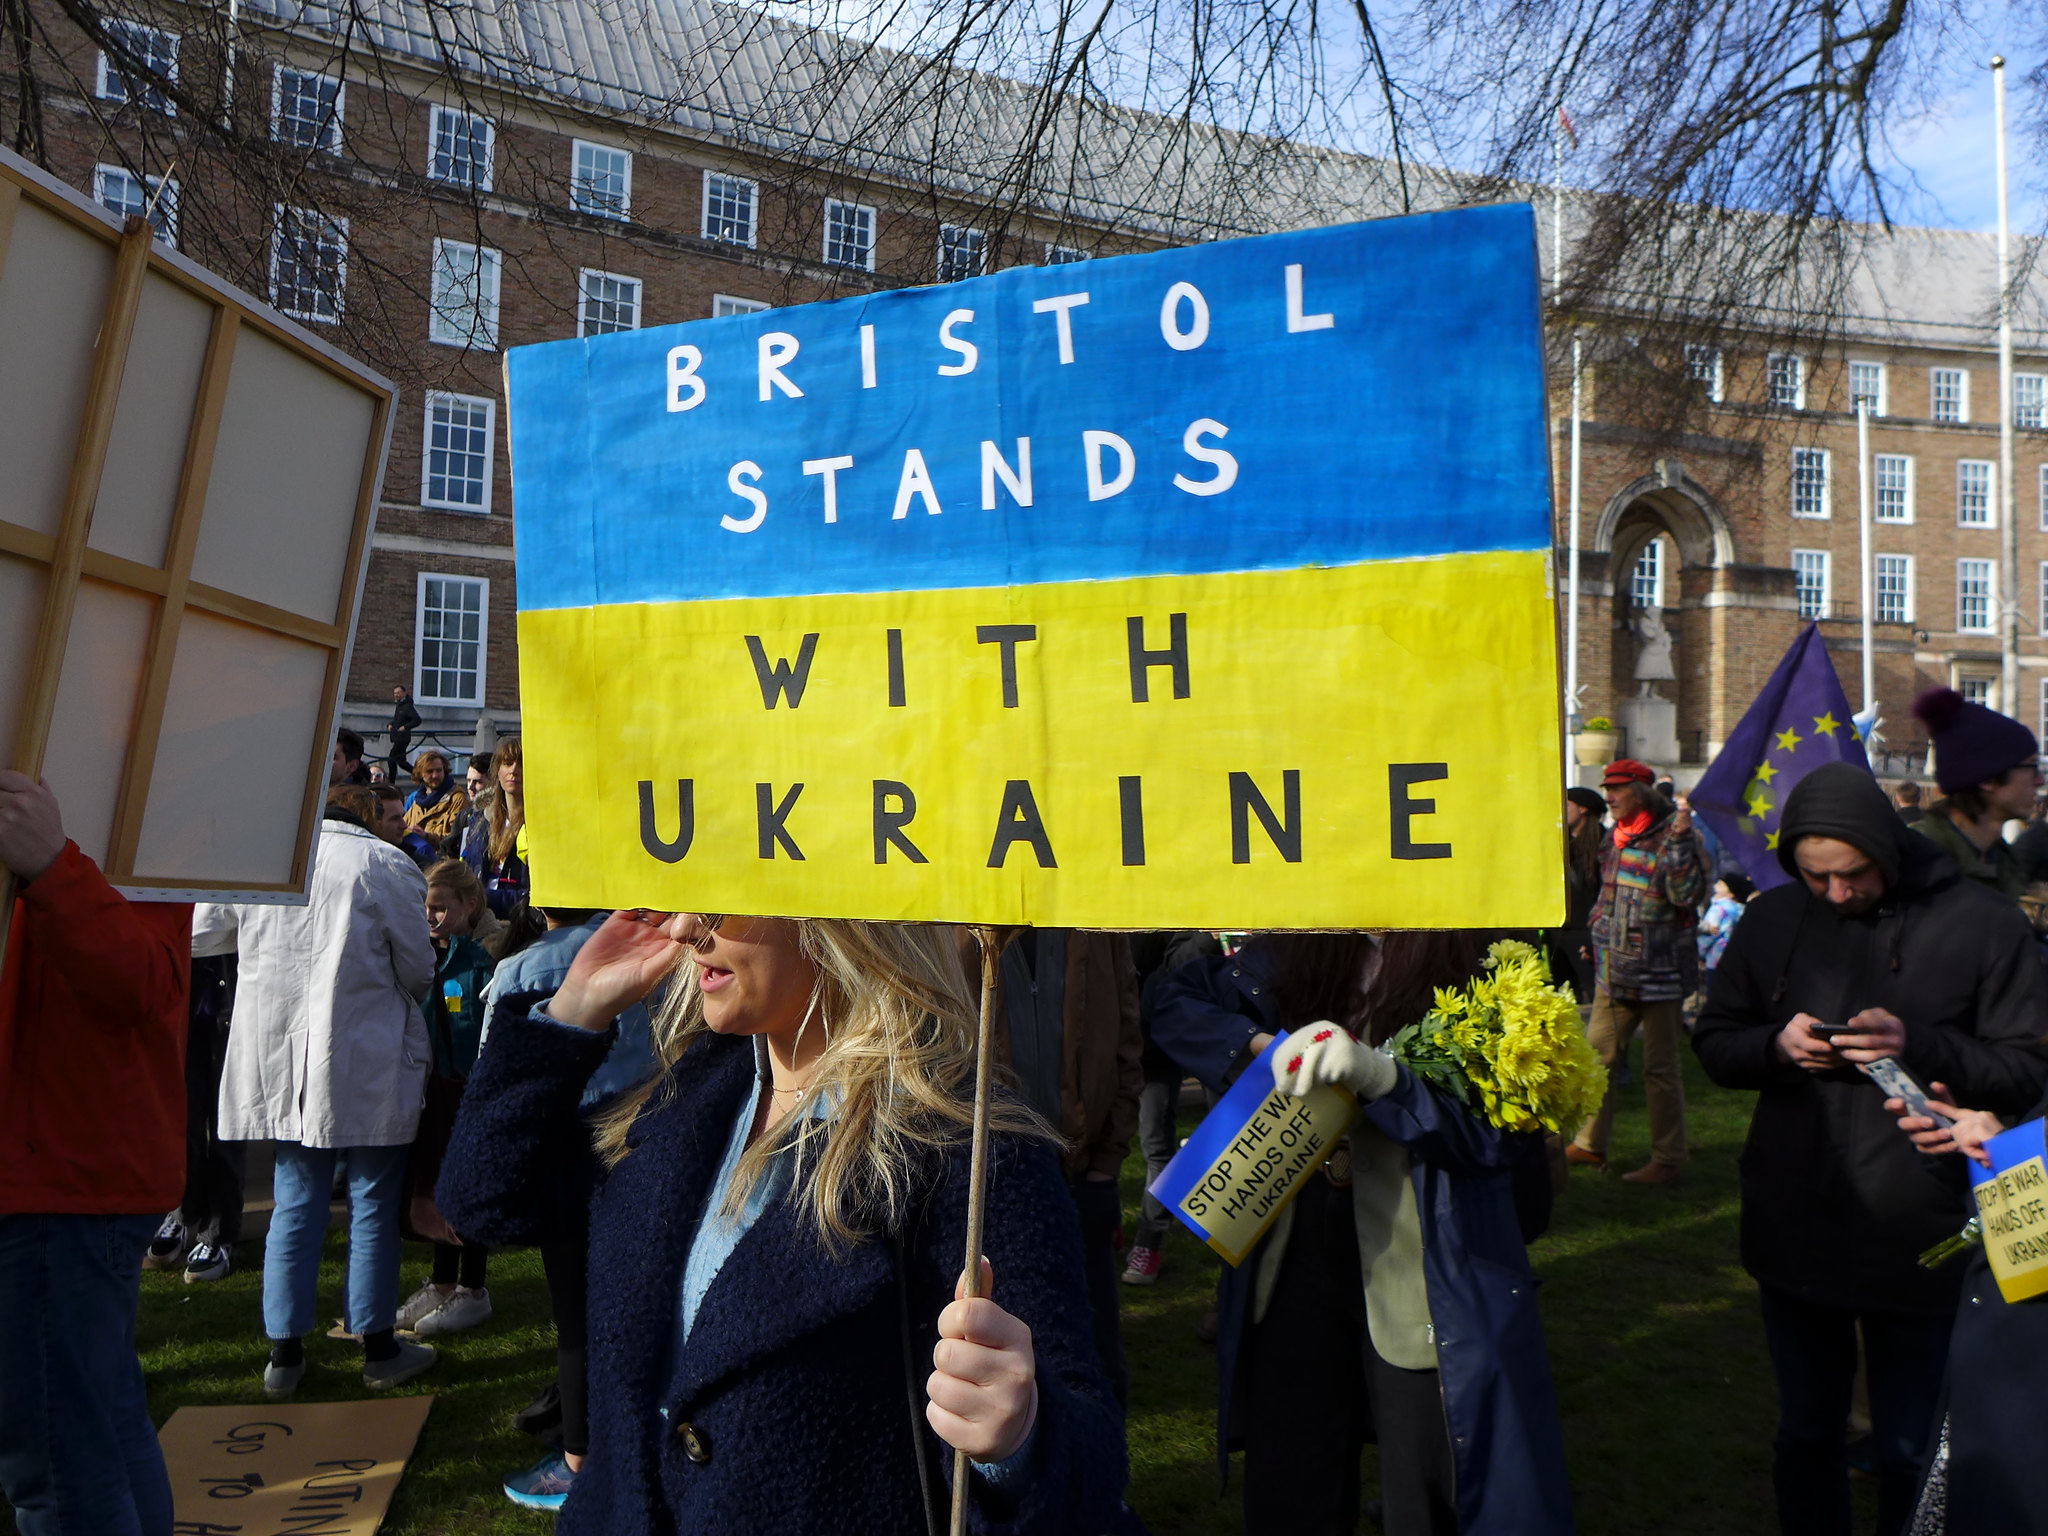 Bristol stands with Ukraine | ChiralJon, Flickr.com